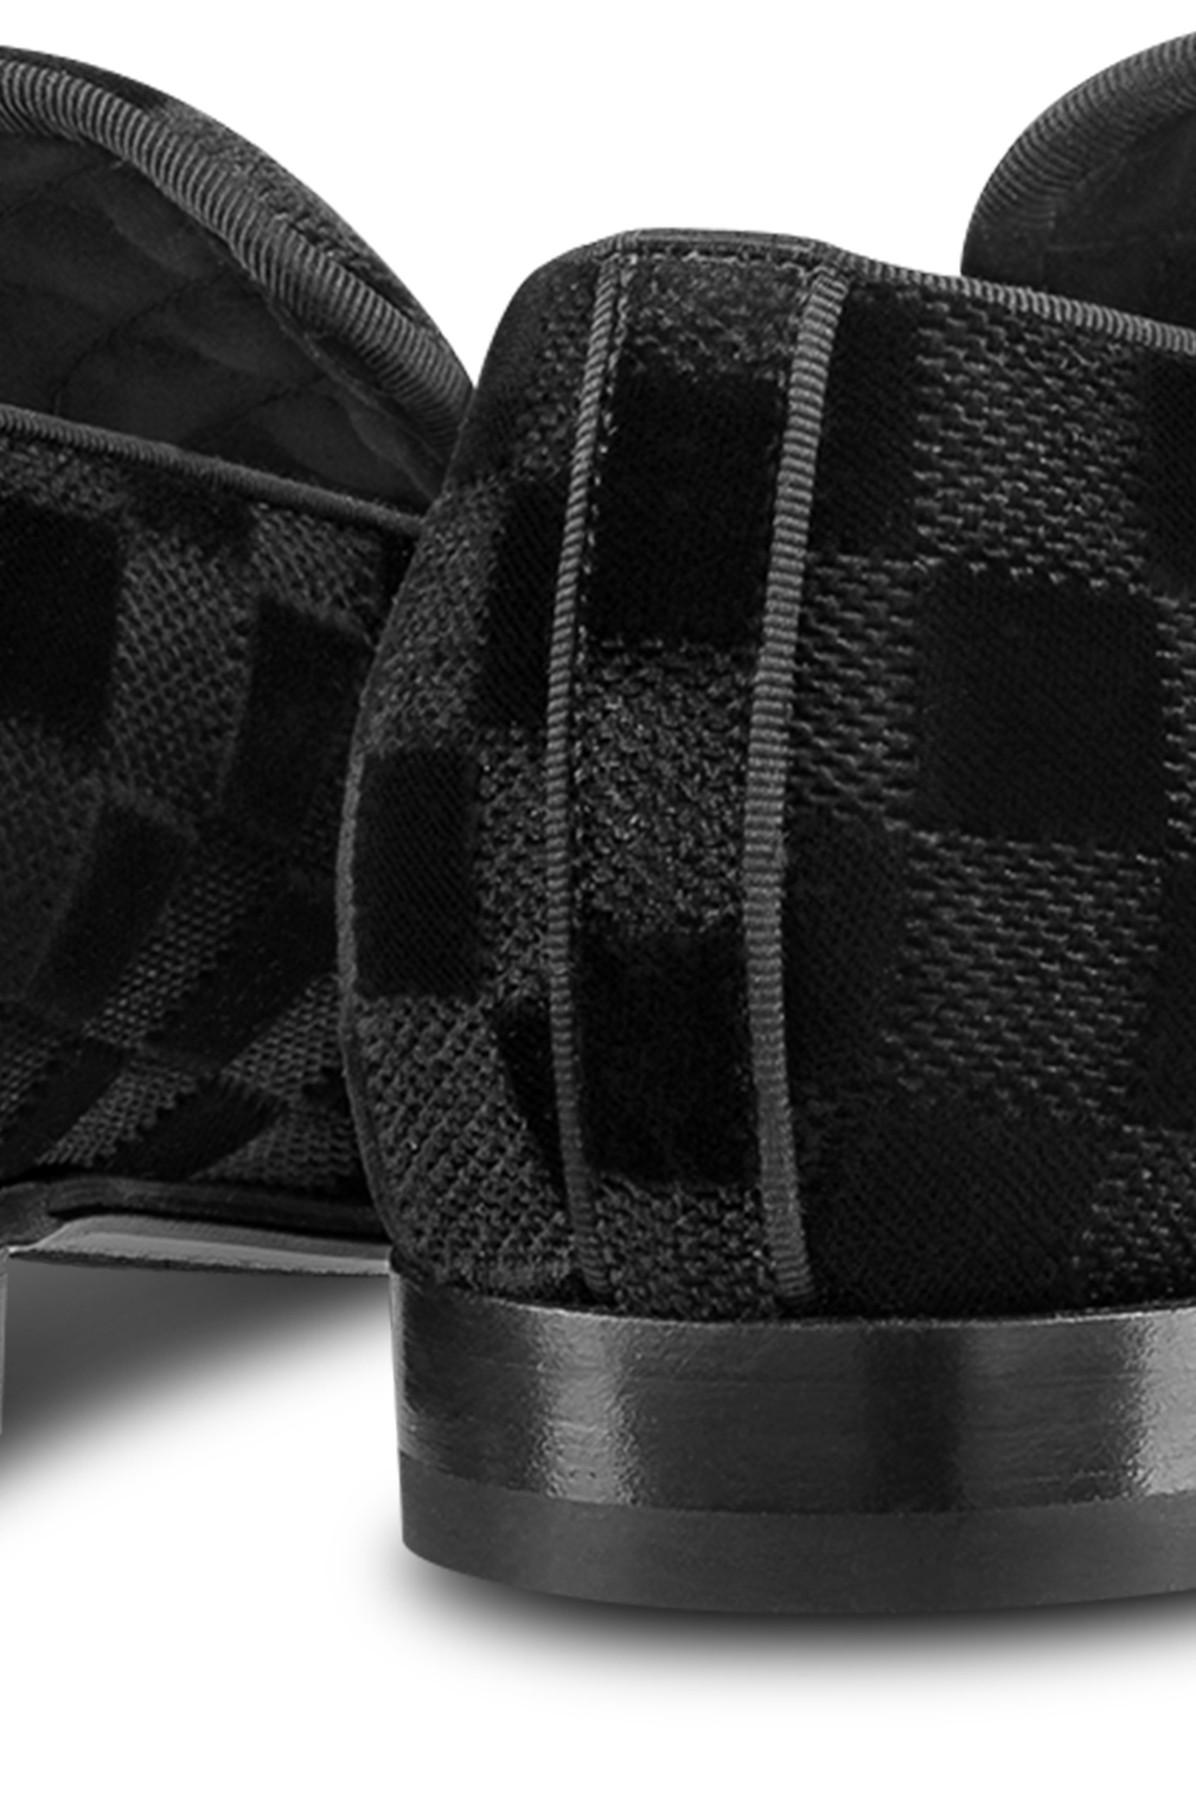 Louis Vuitton Black Widow Slippers for Men